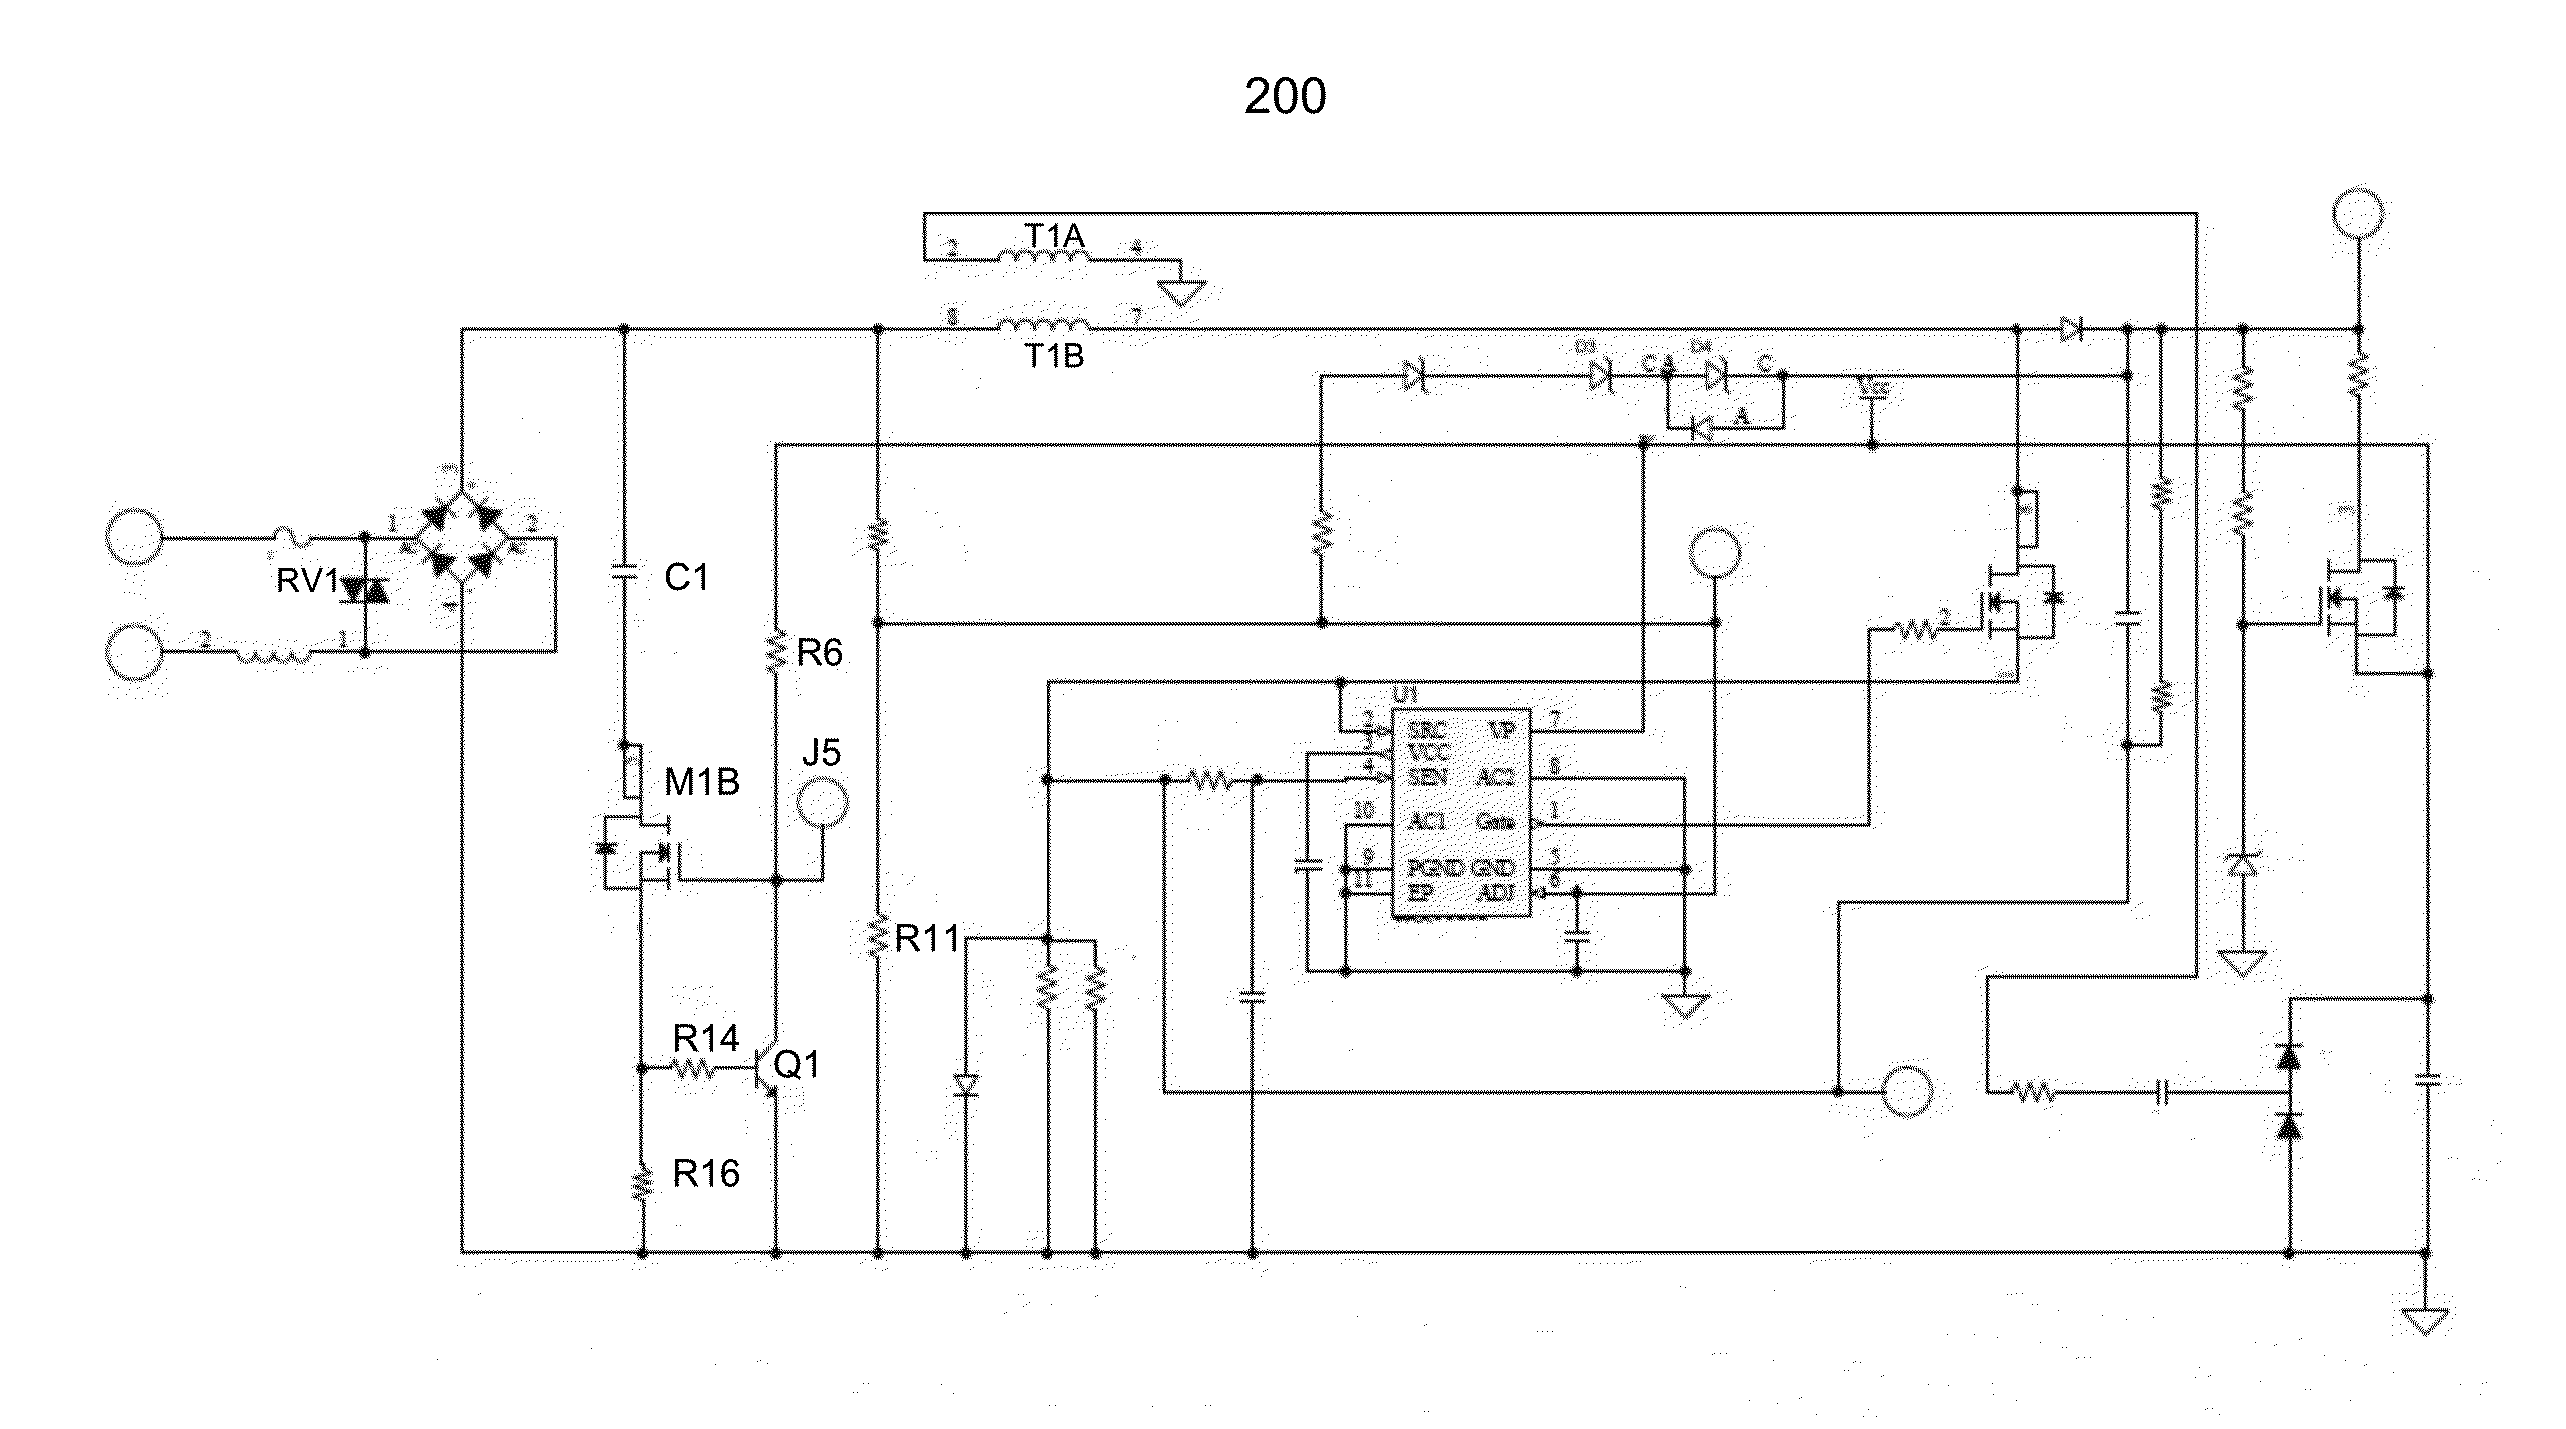 Multi-mode controller circuit